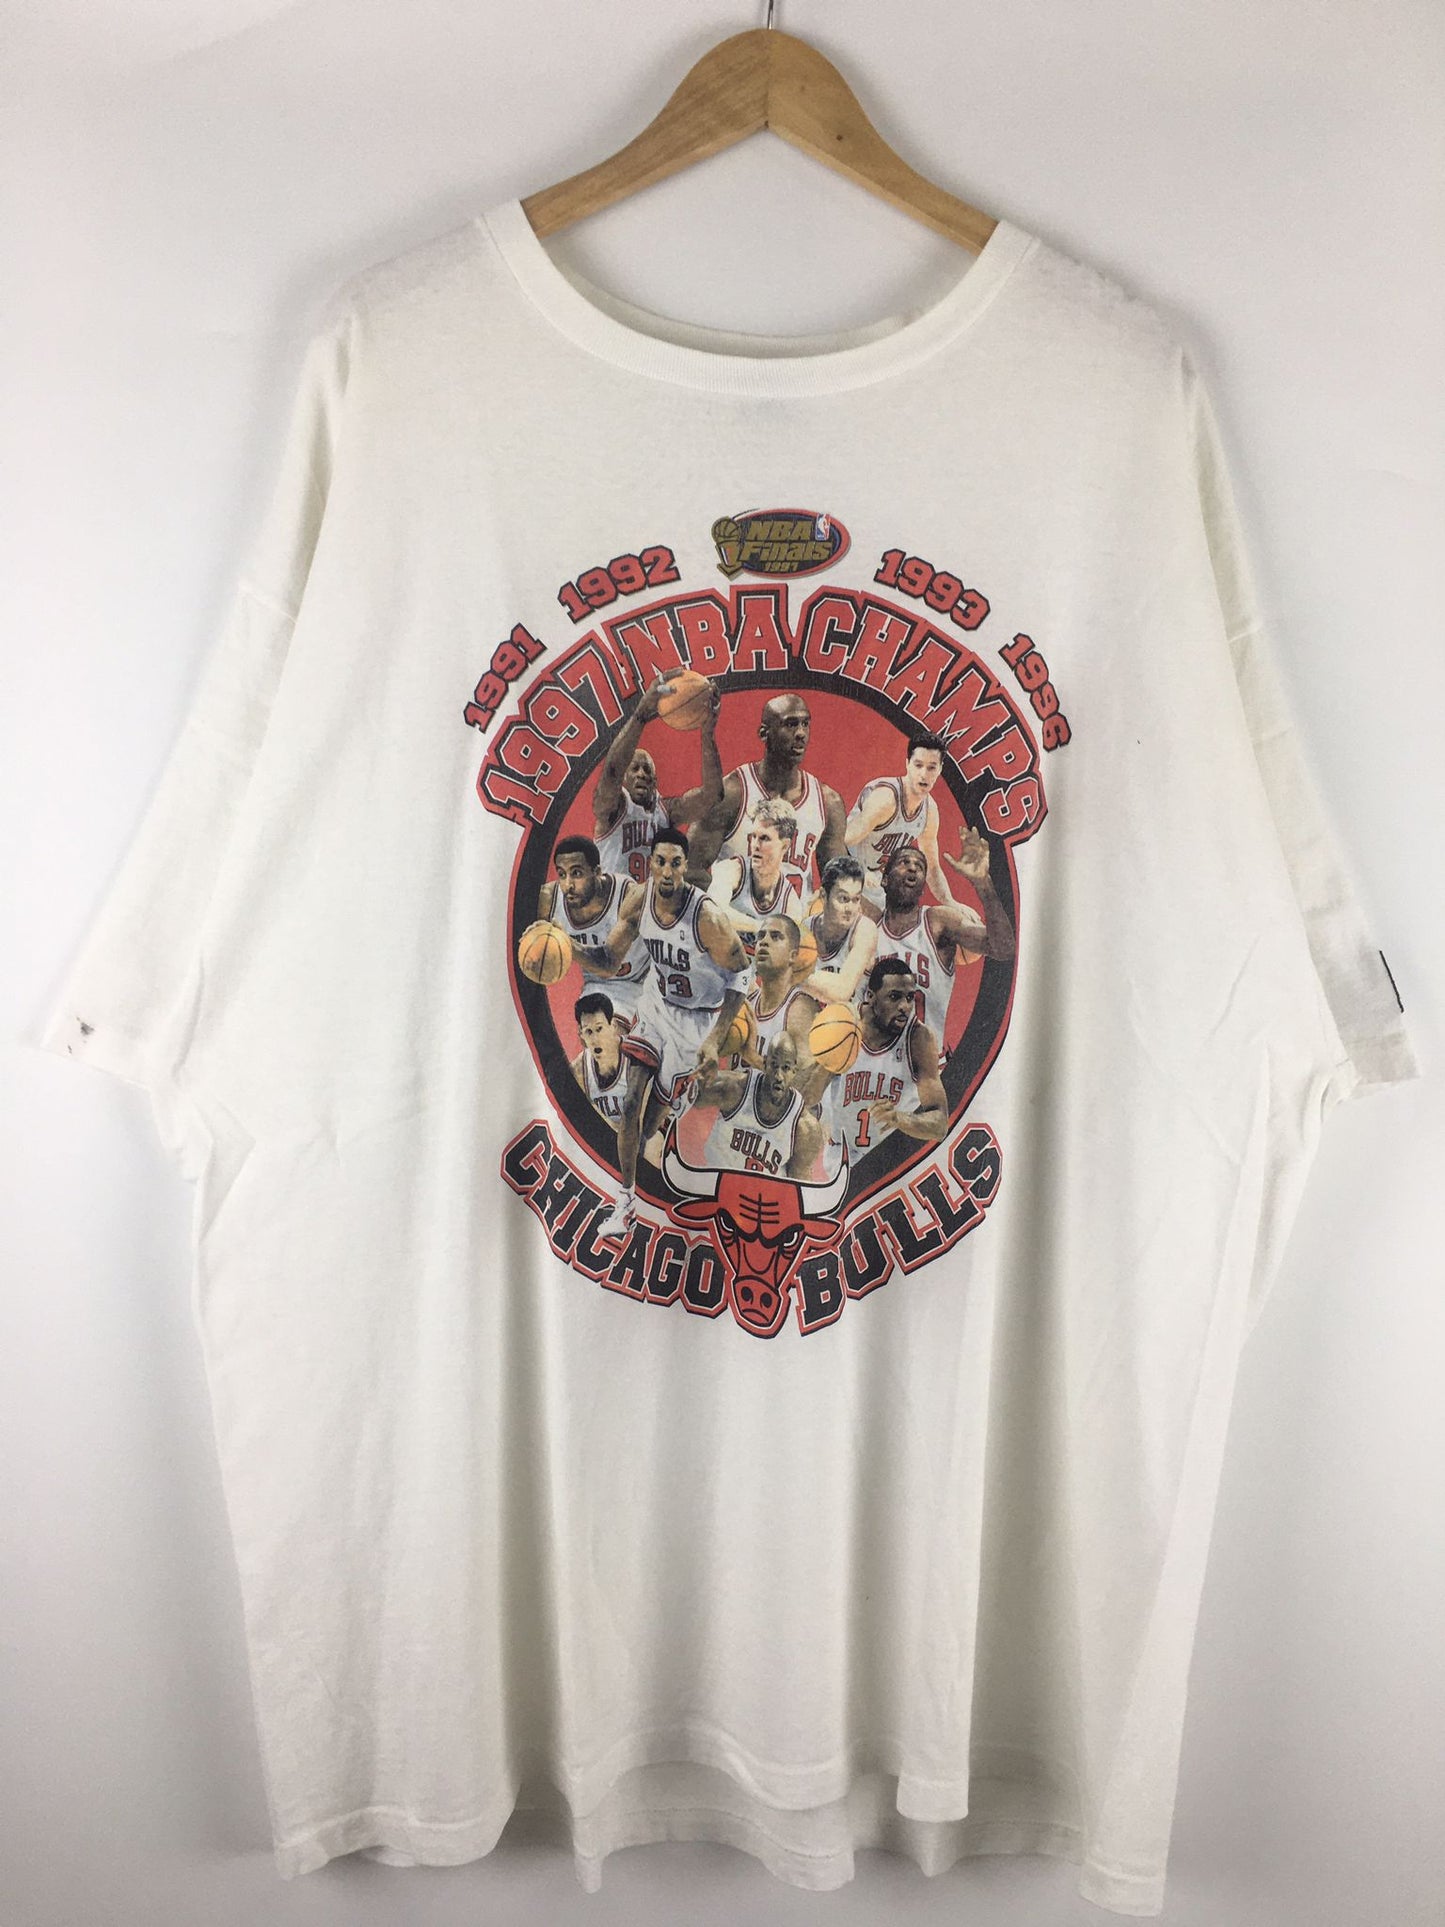 Vintage Chicago Bulls NBA 1998 champion 3peats repeat T-shirt